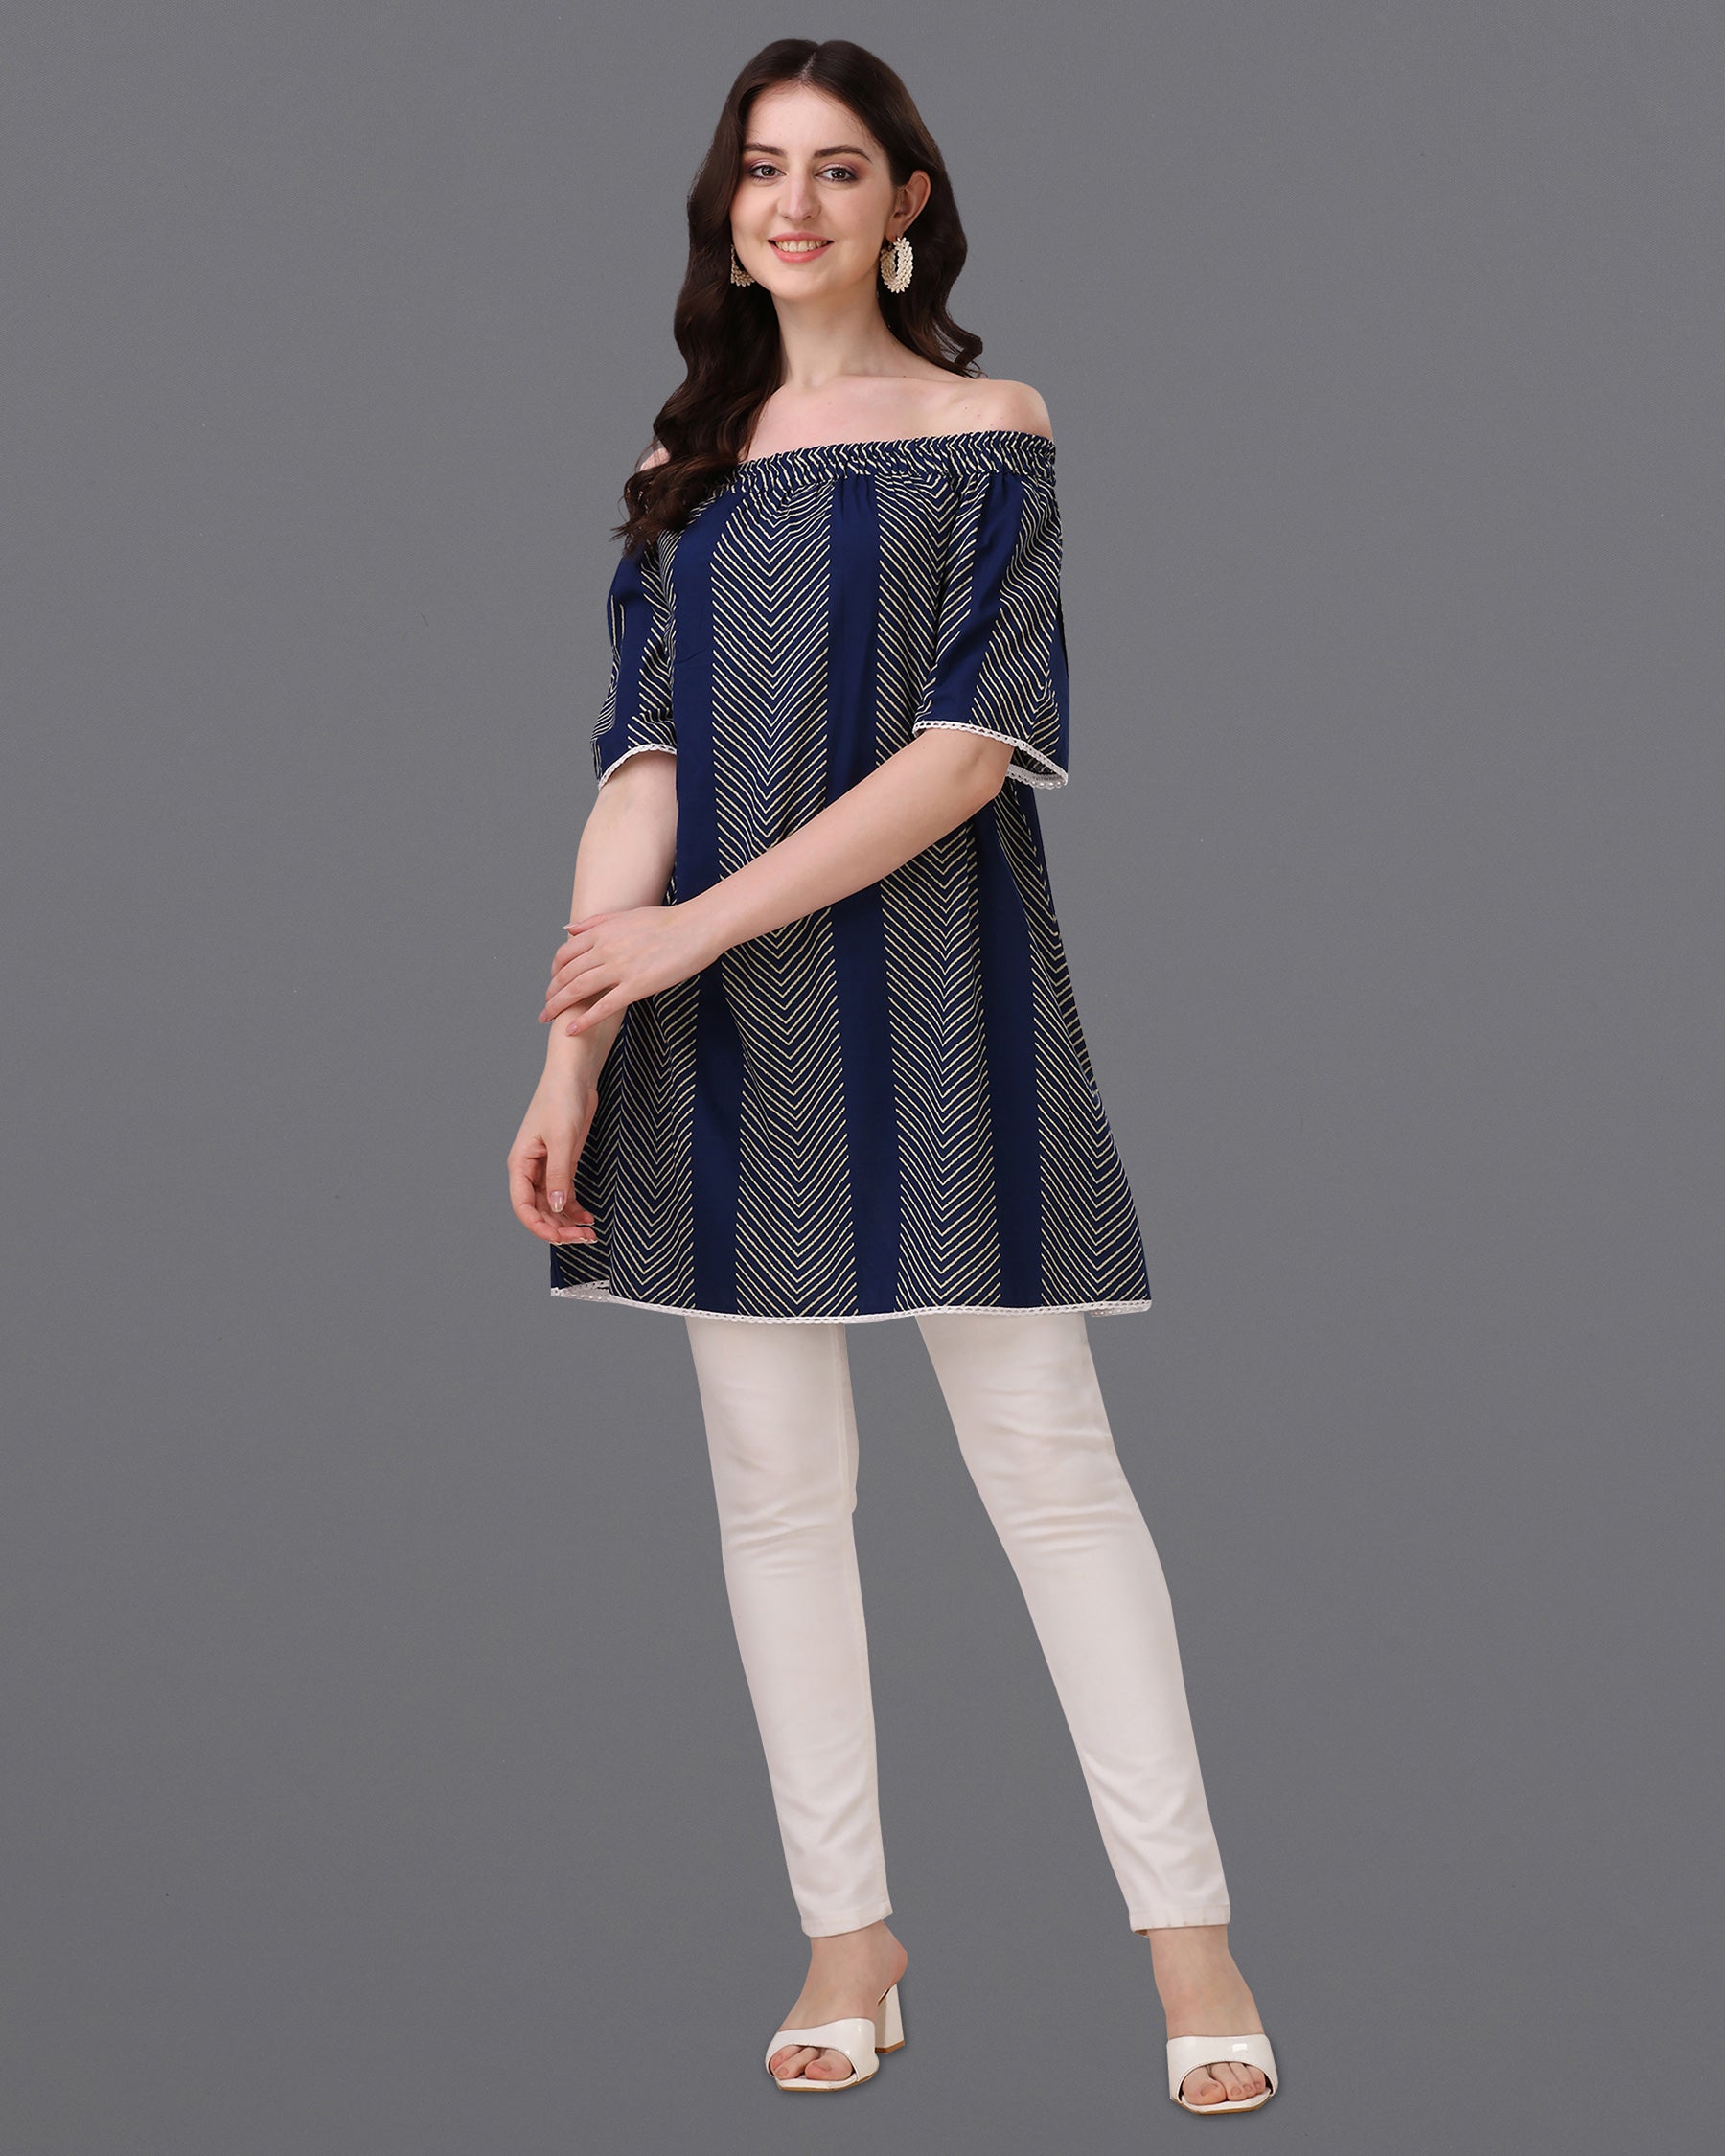 Ebony Clay Blue and Almond Geometric Print Super Soft Premium Cotton Off-shoulder Dress WD045-32, WD045-34, WD045-36, WD045-38, WD045-40, WD045-42